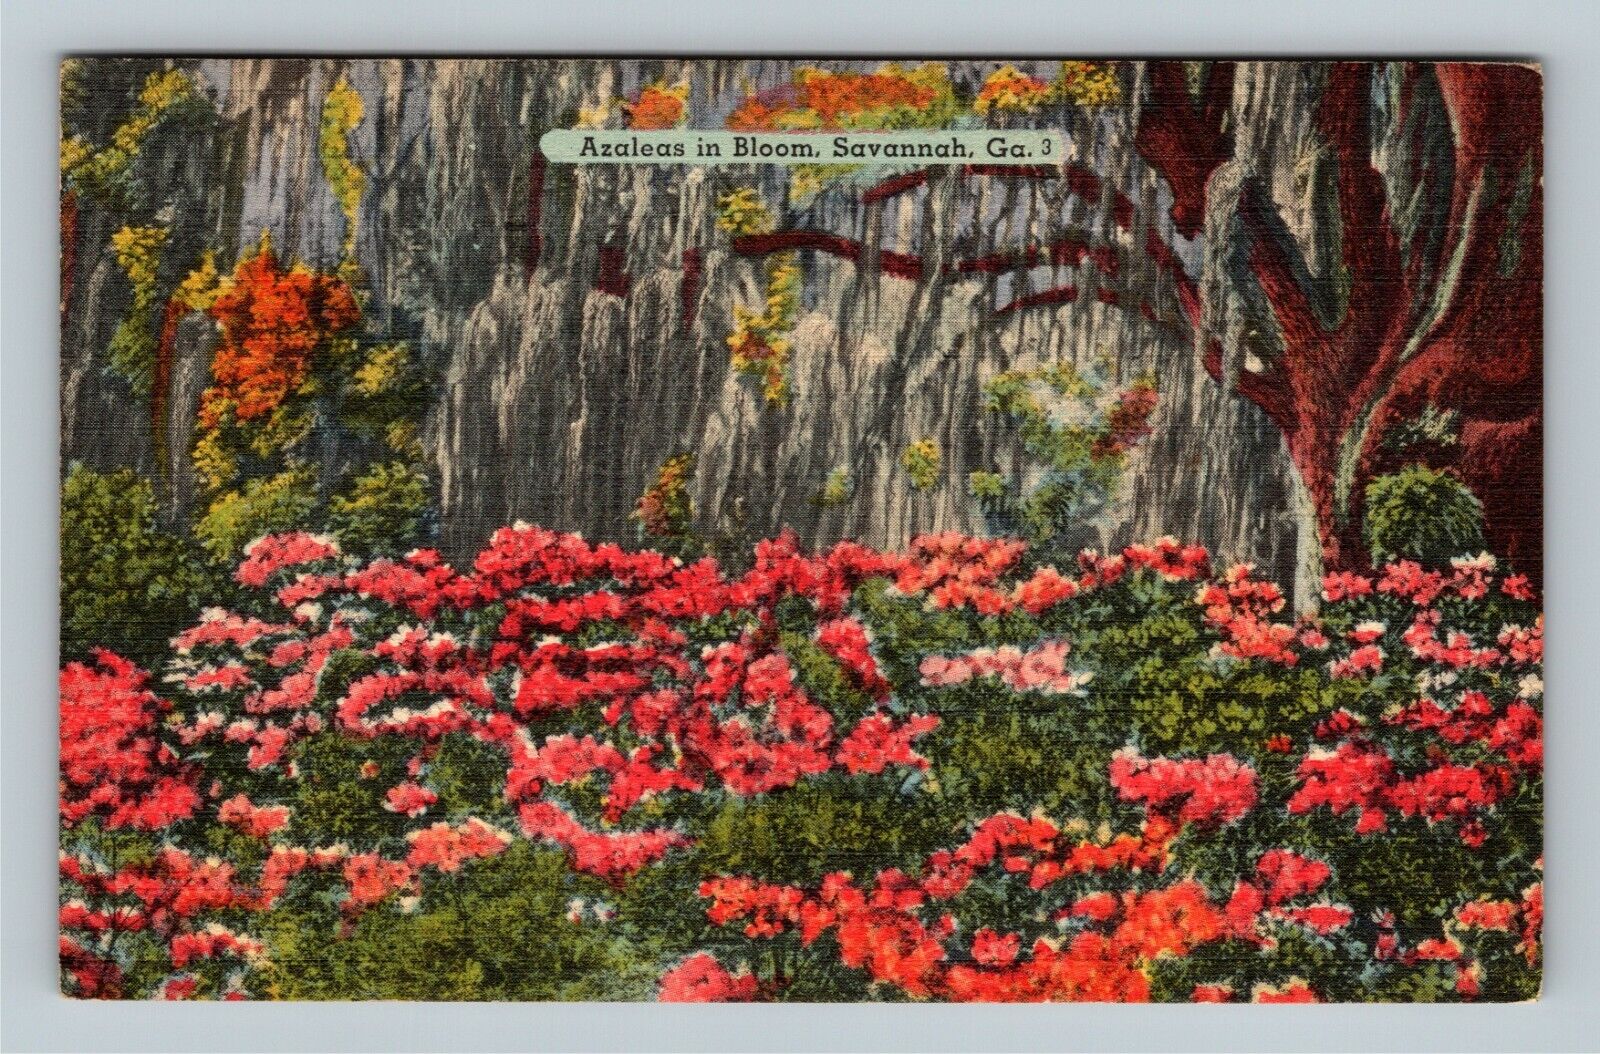 Savannah GA, Azaleas In Bloom, Georgia c1957 Vintage Postcard